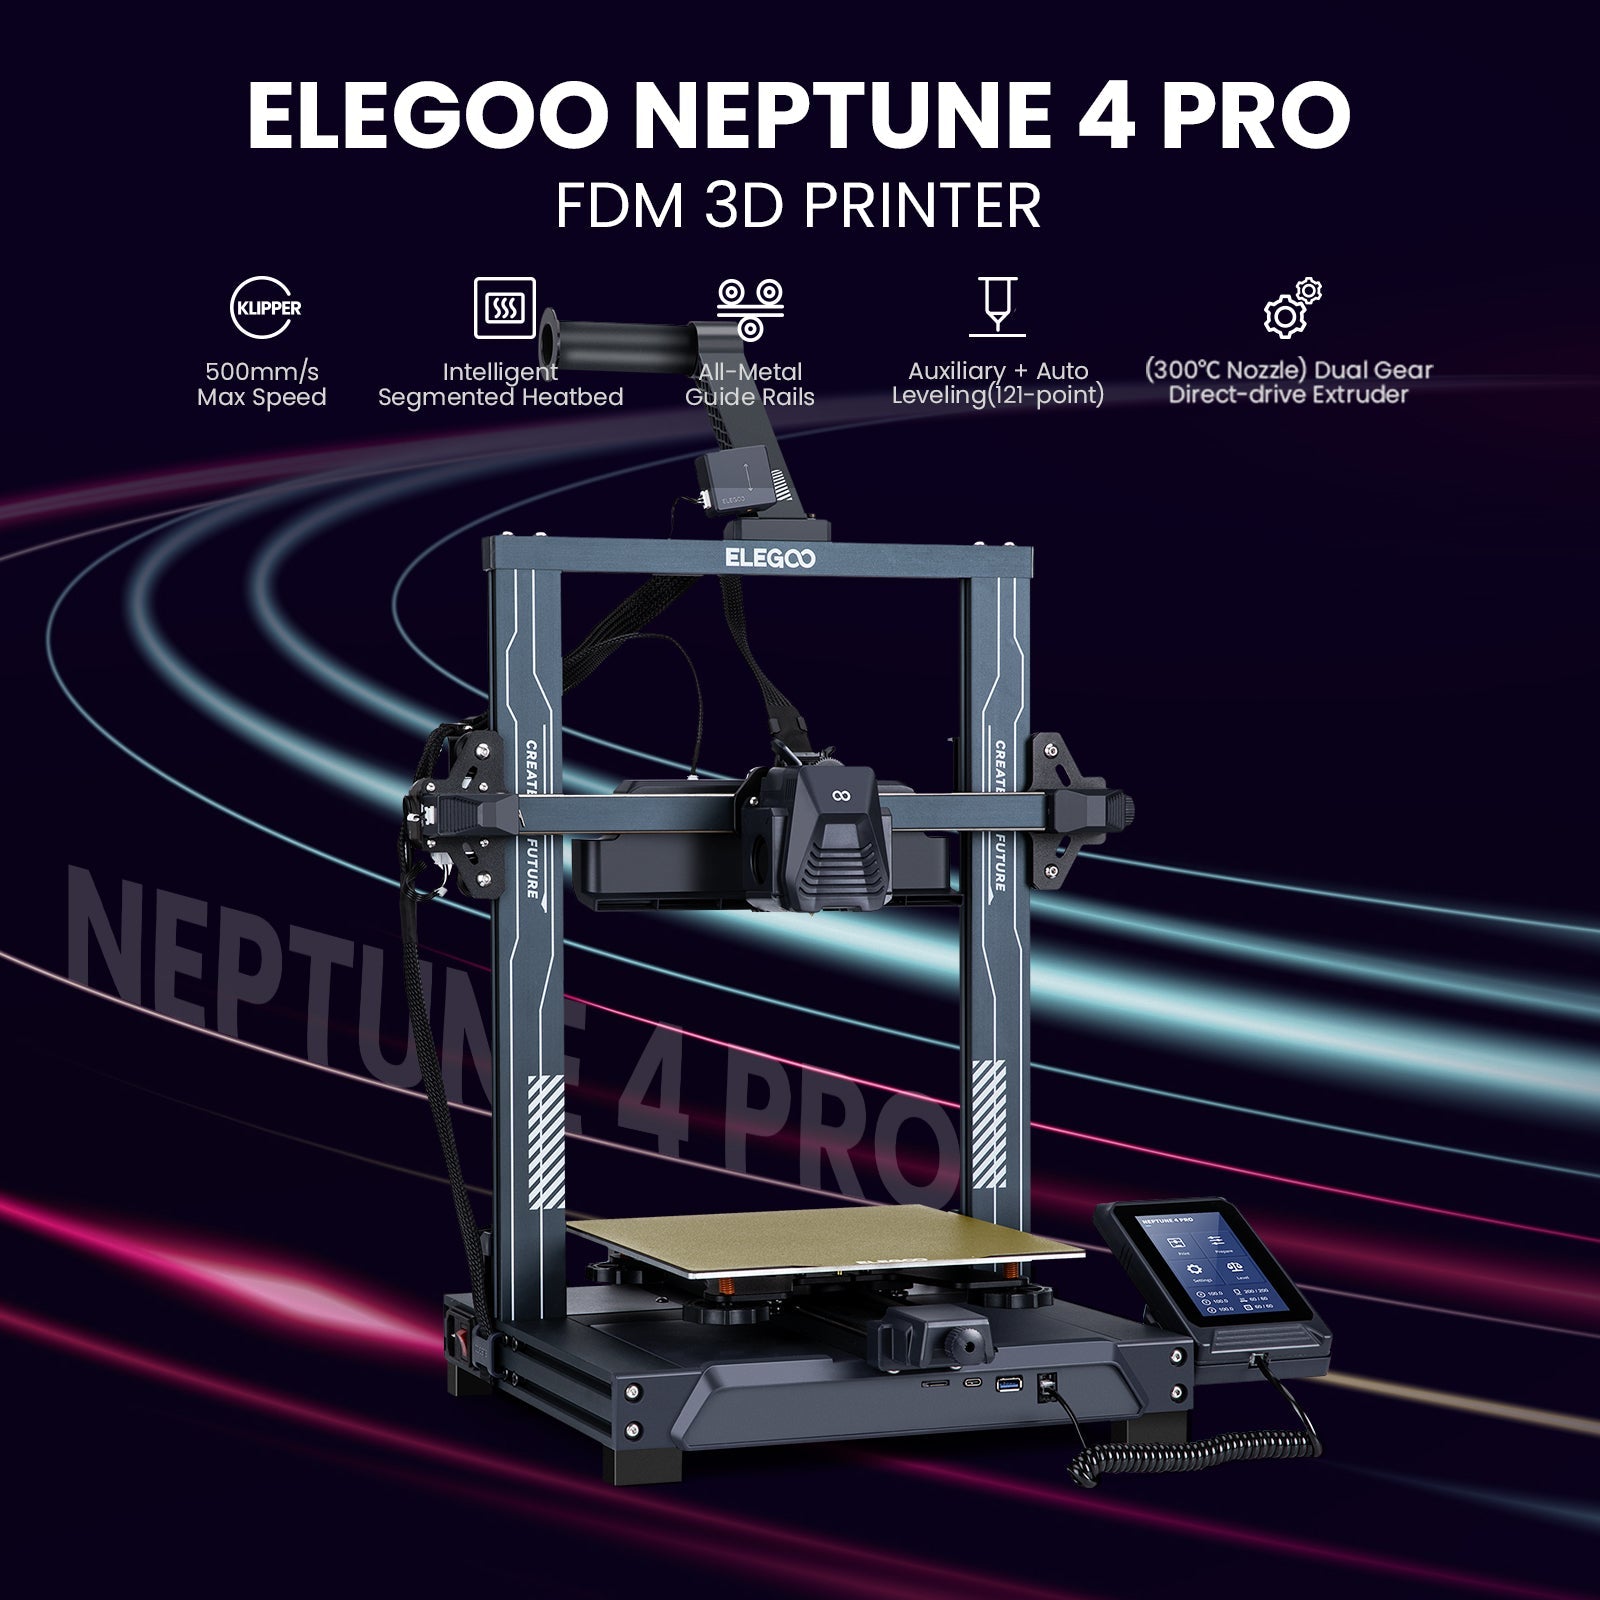 Elegoo Neptune 4 Series - Klipper Remote Access